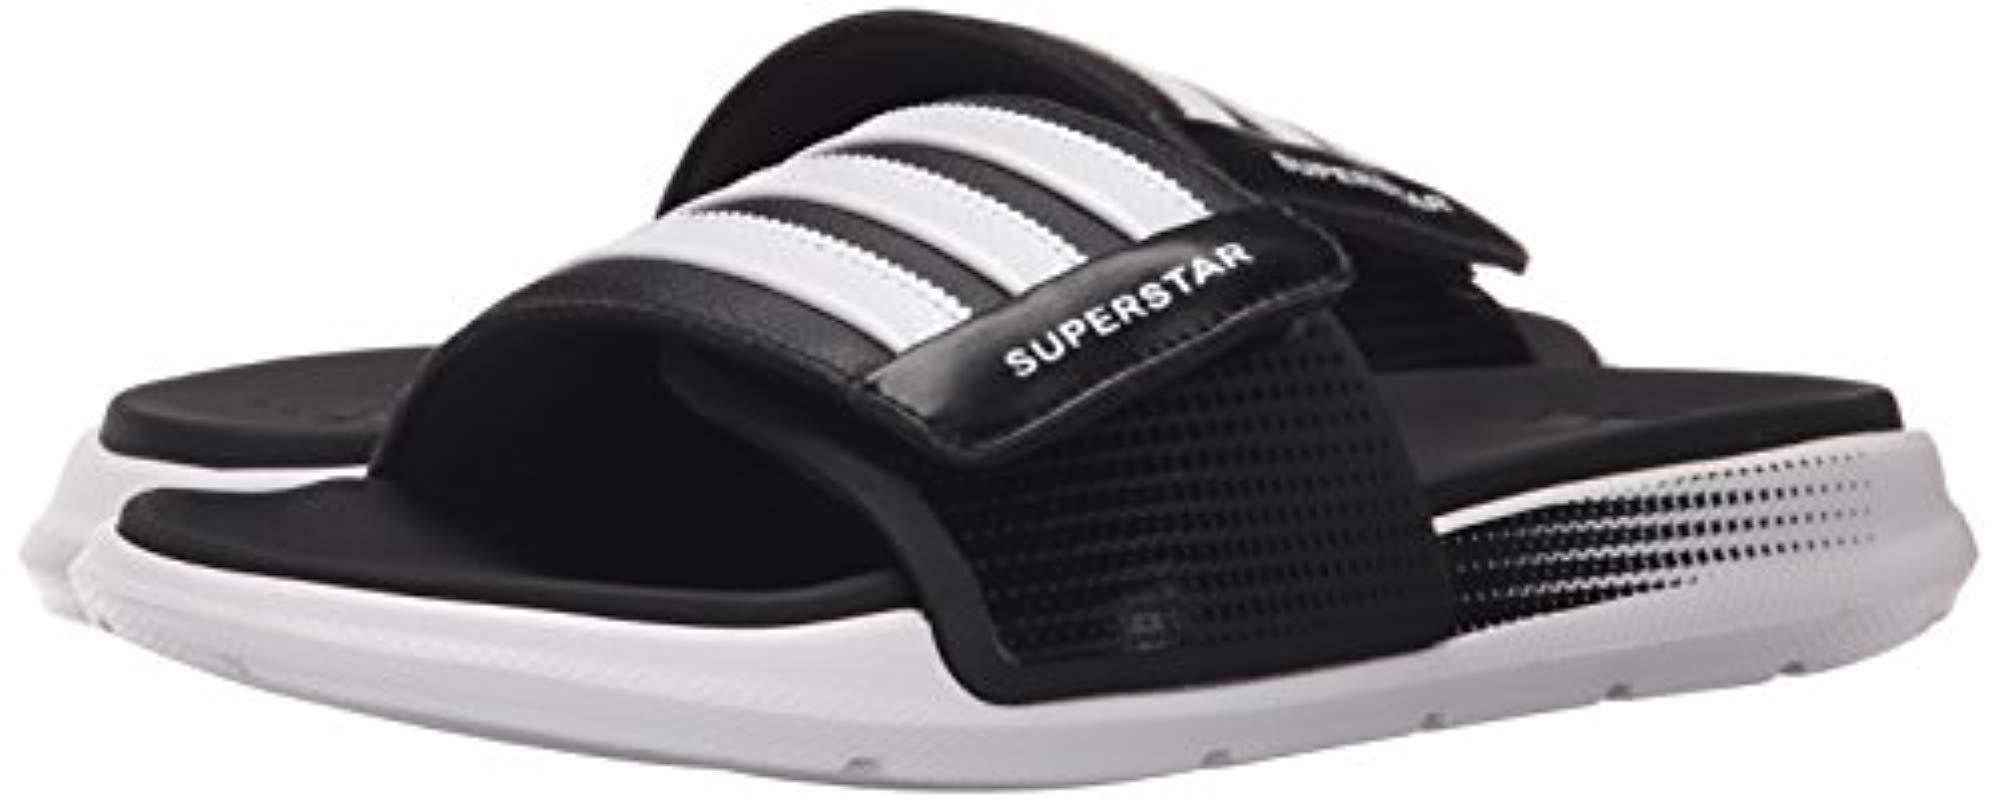 adidas performance men's superstar 4g athletic sandal